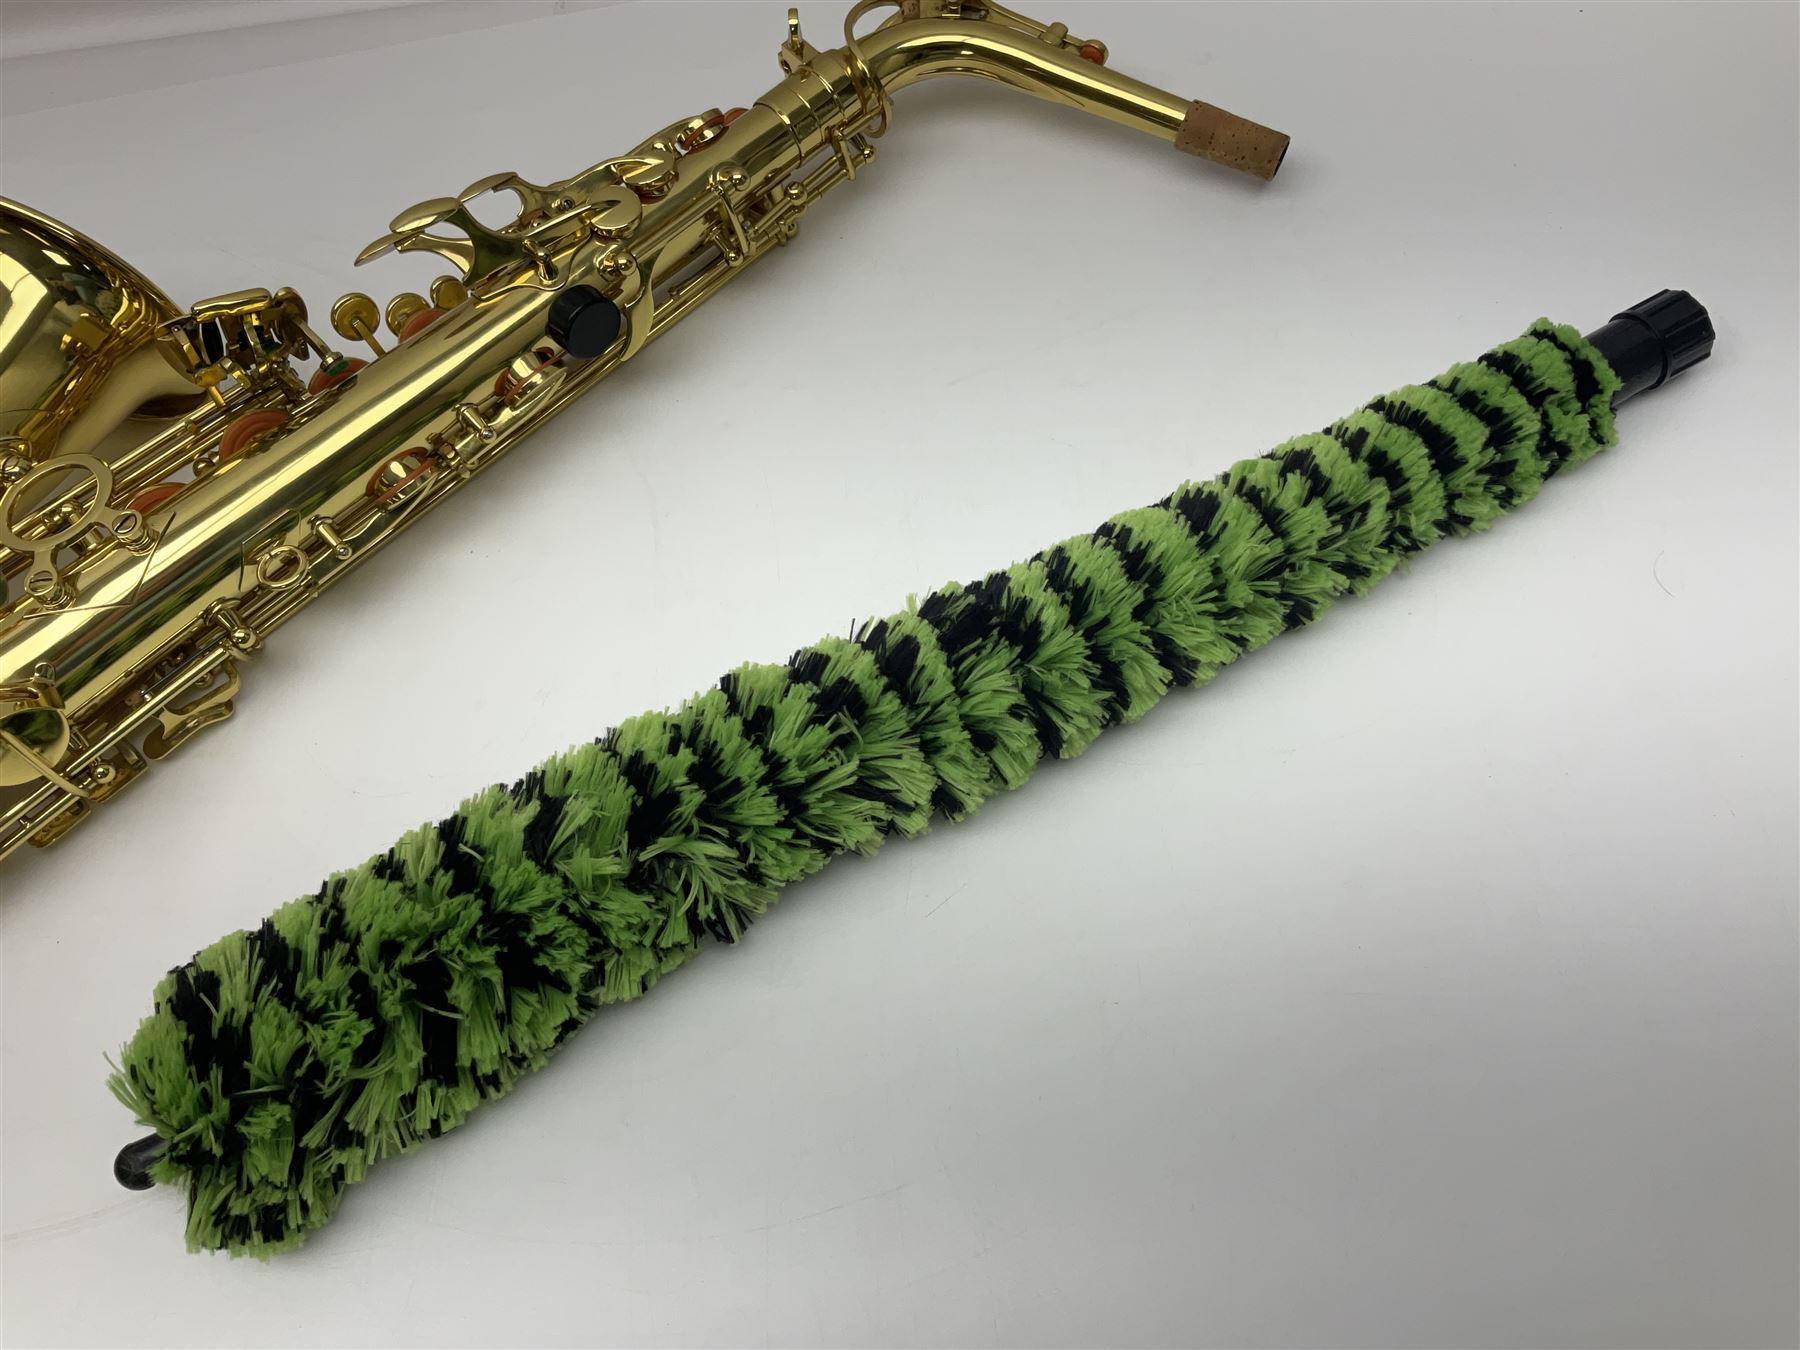 Arnolds & Sons Model ASA-100 alto saxophone - Image 21 of 23